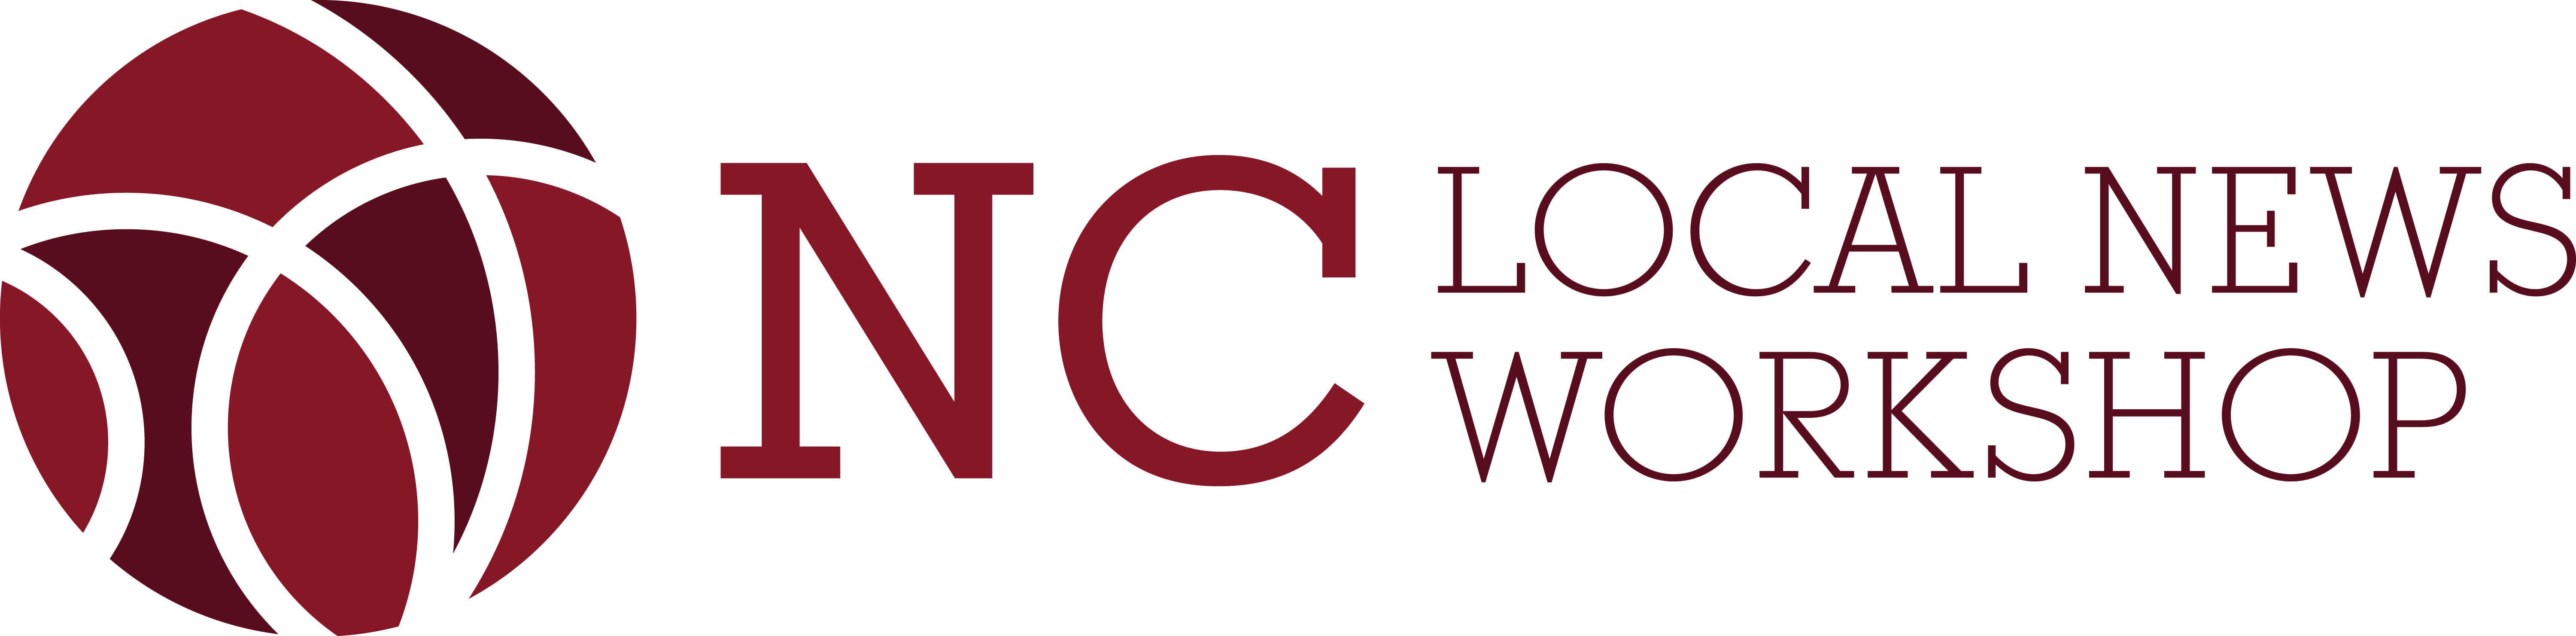 NC Local News Workshop logo